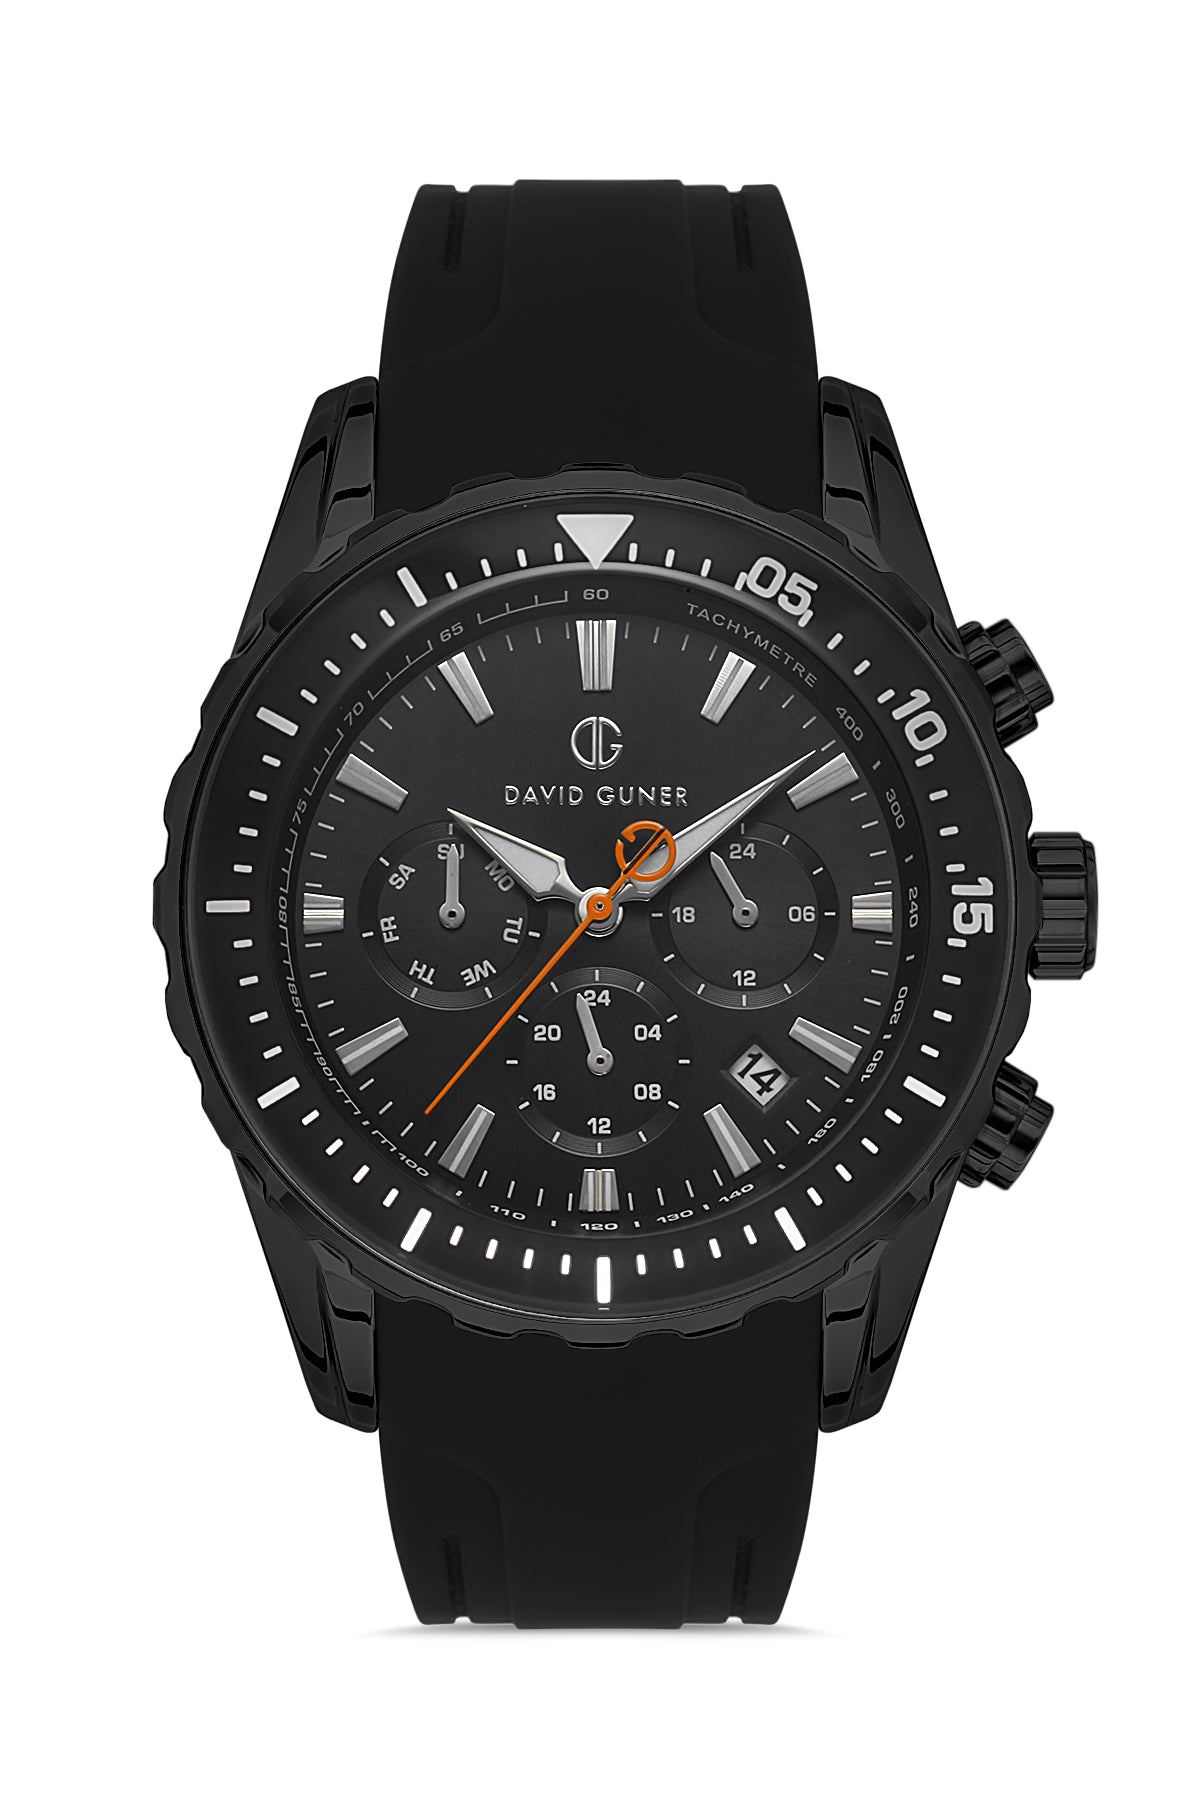 DAVID GUNER Multifunctional Black Coated Men's Wristwatch